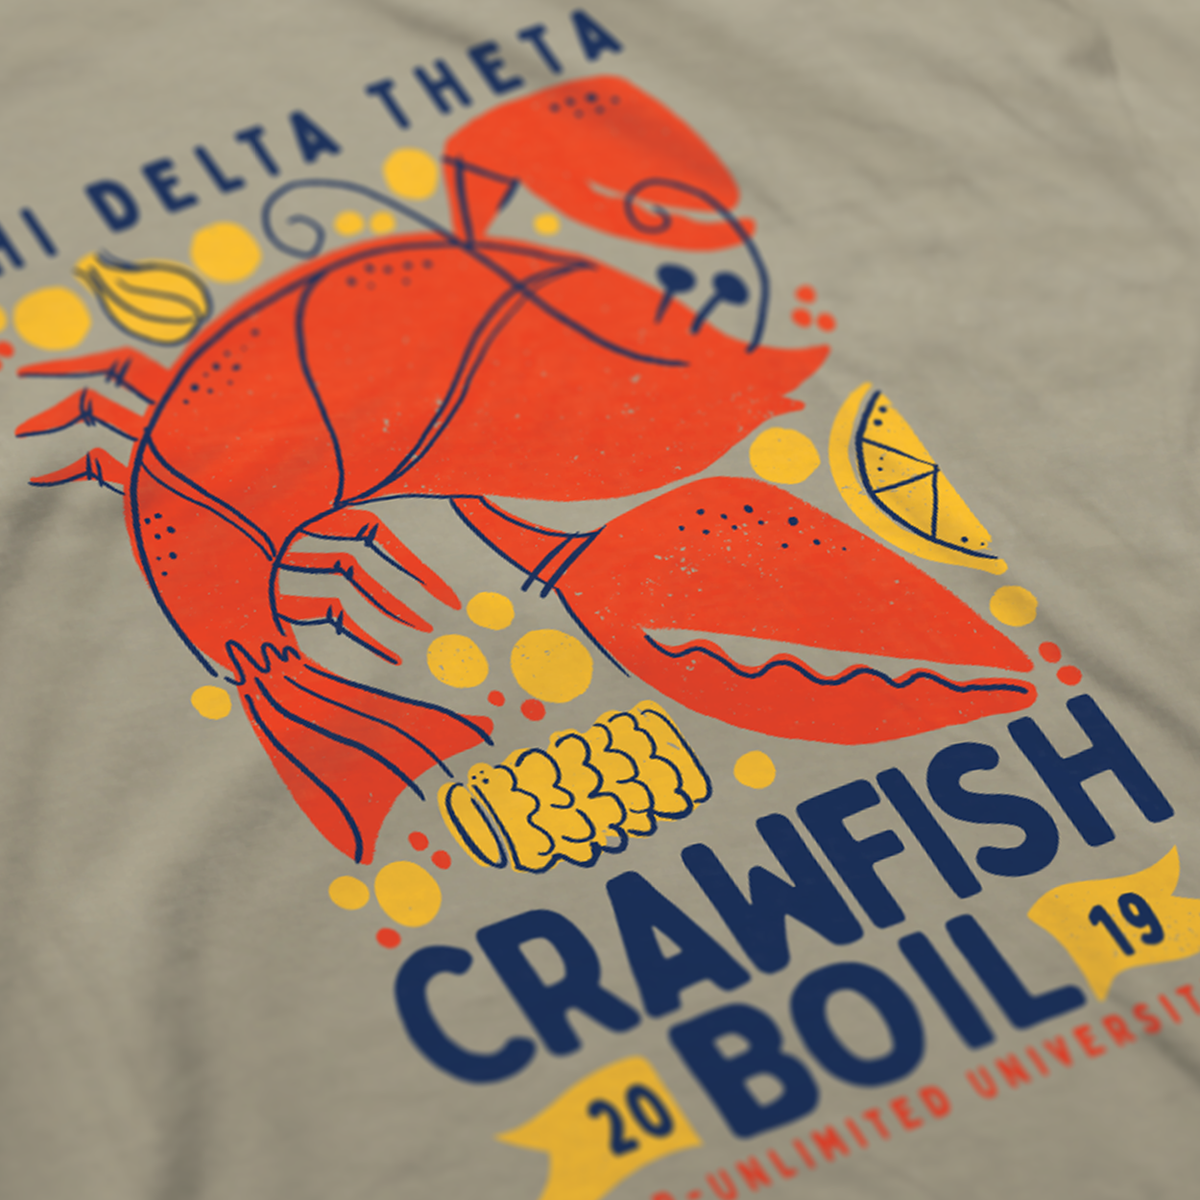 ST2019-009 - Crawfish